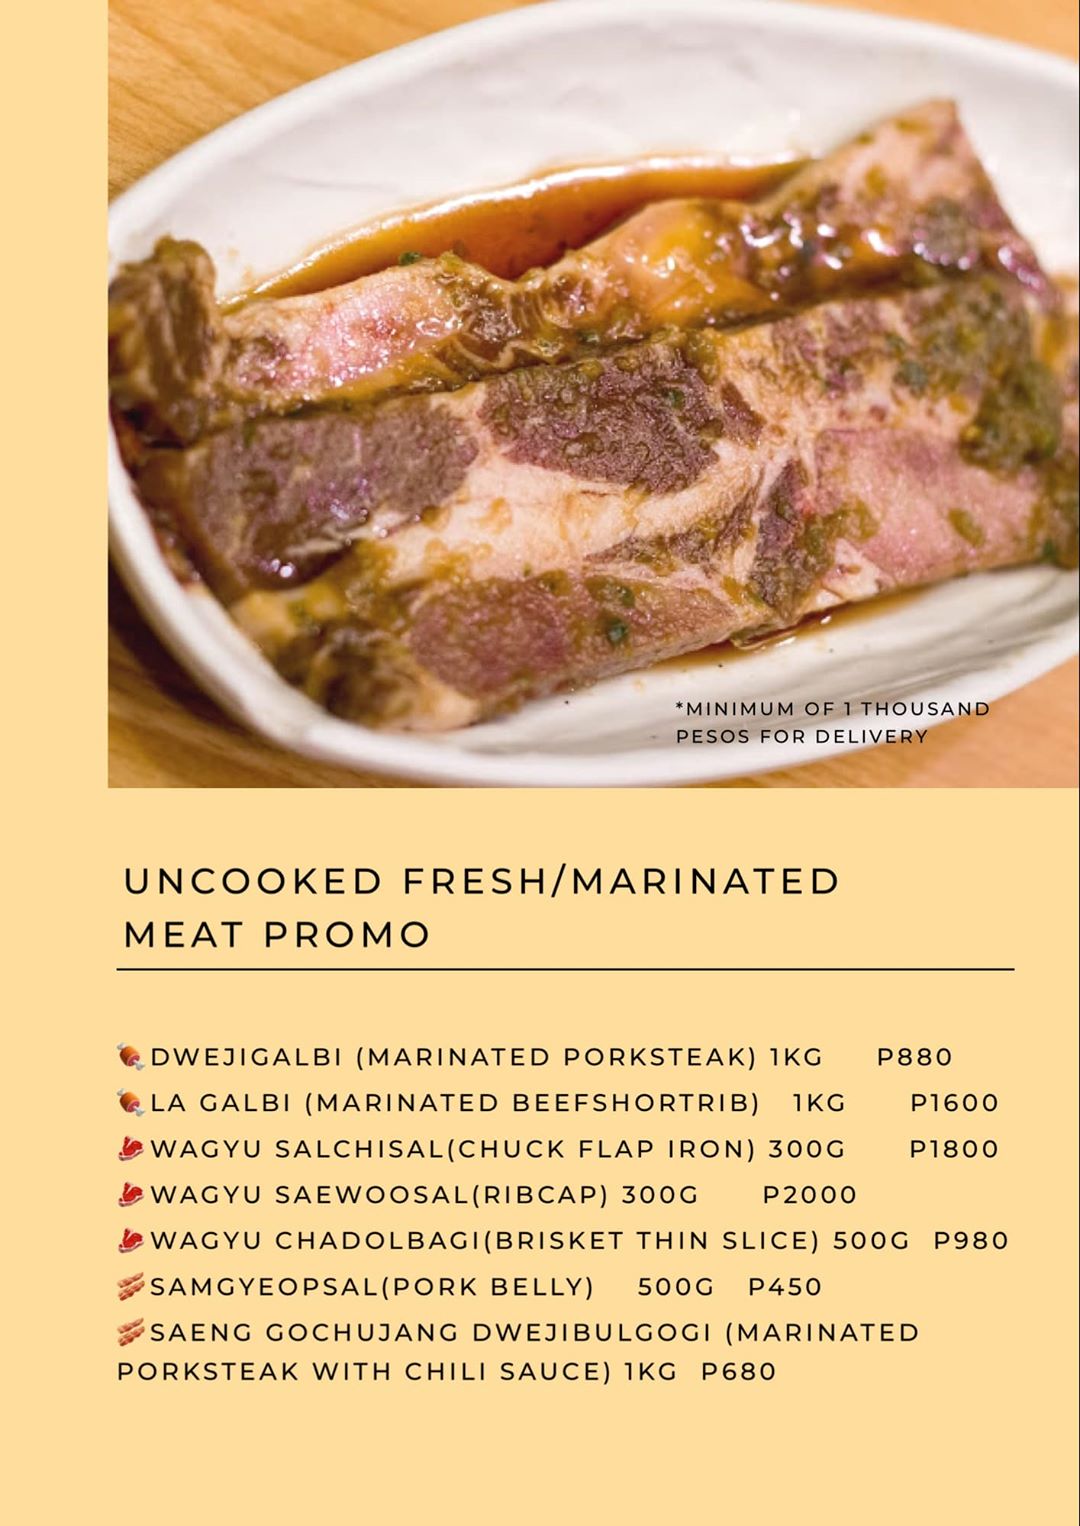 Uncooked fresh/marinated meat promo from Soga Miga